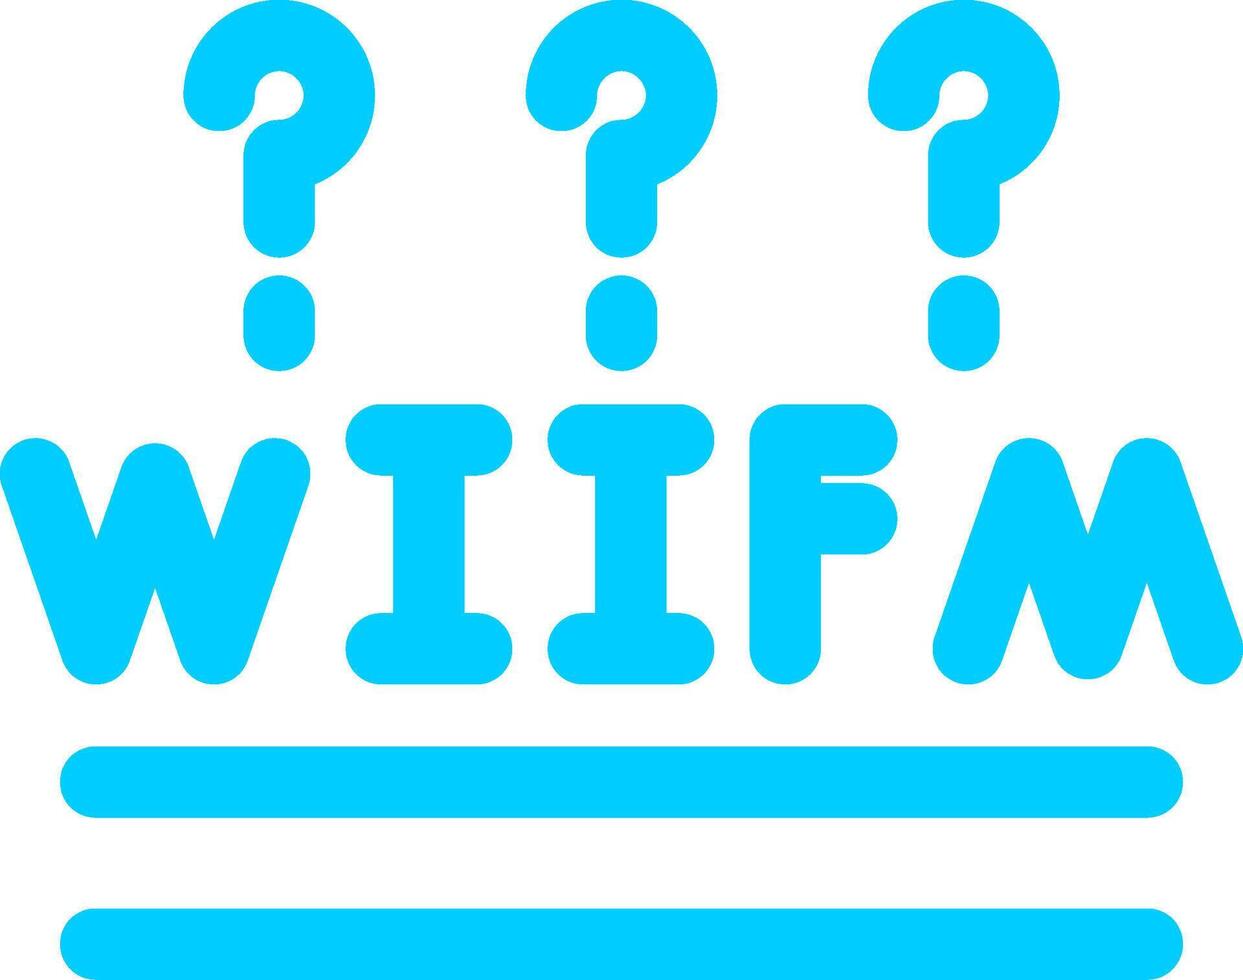 WIIFM Creative Icon Design vector